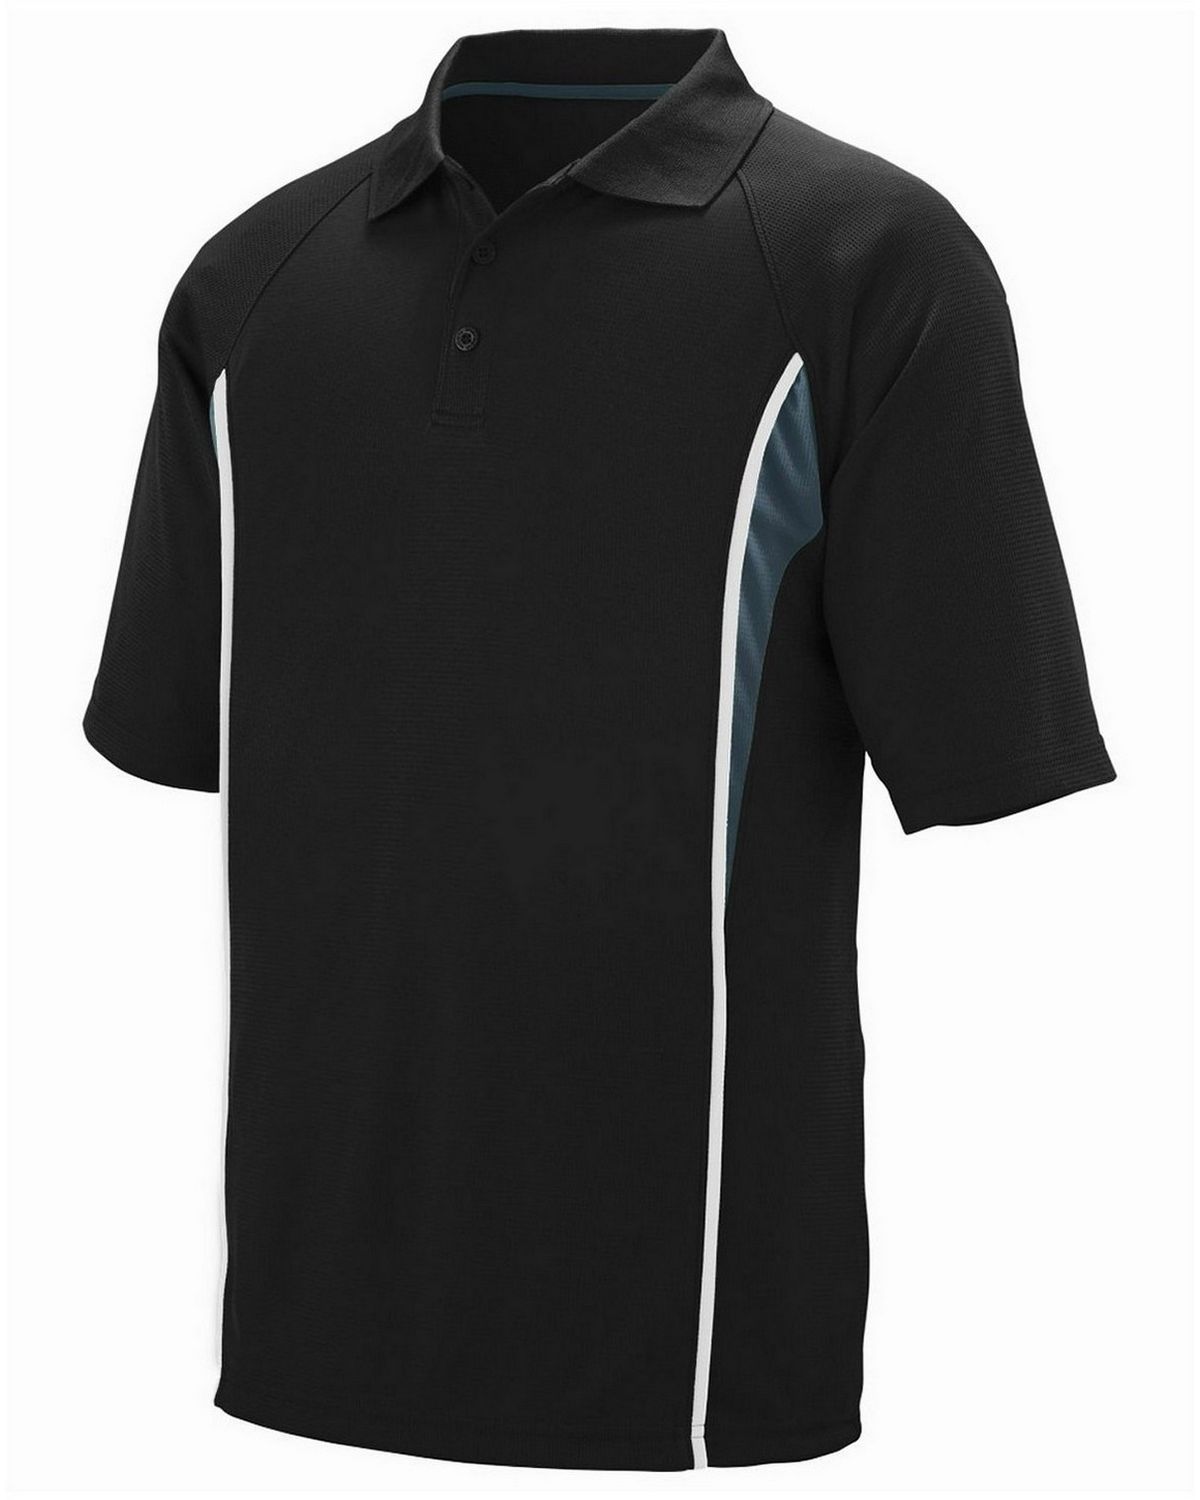 Augusta Sportswear 5023 Adult Wicking Polyester Mesh Sport Shirt